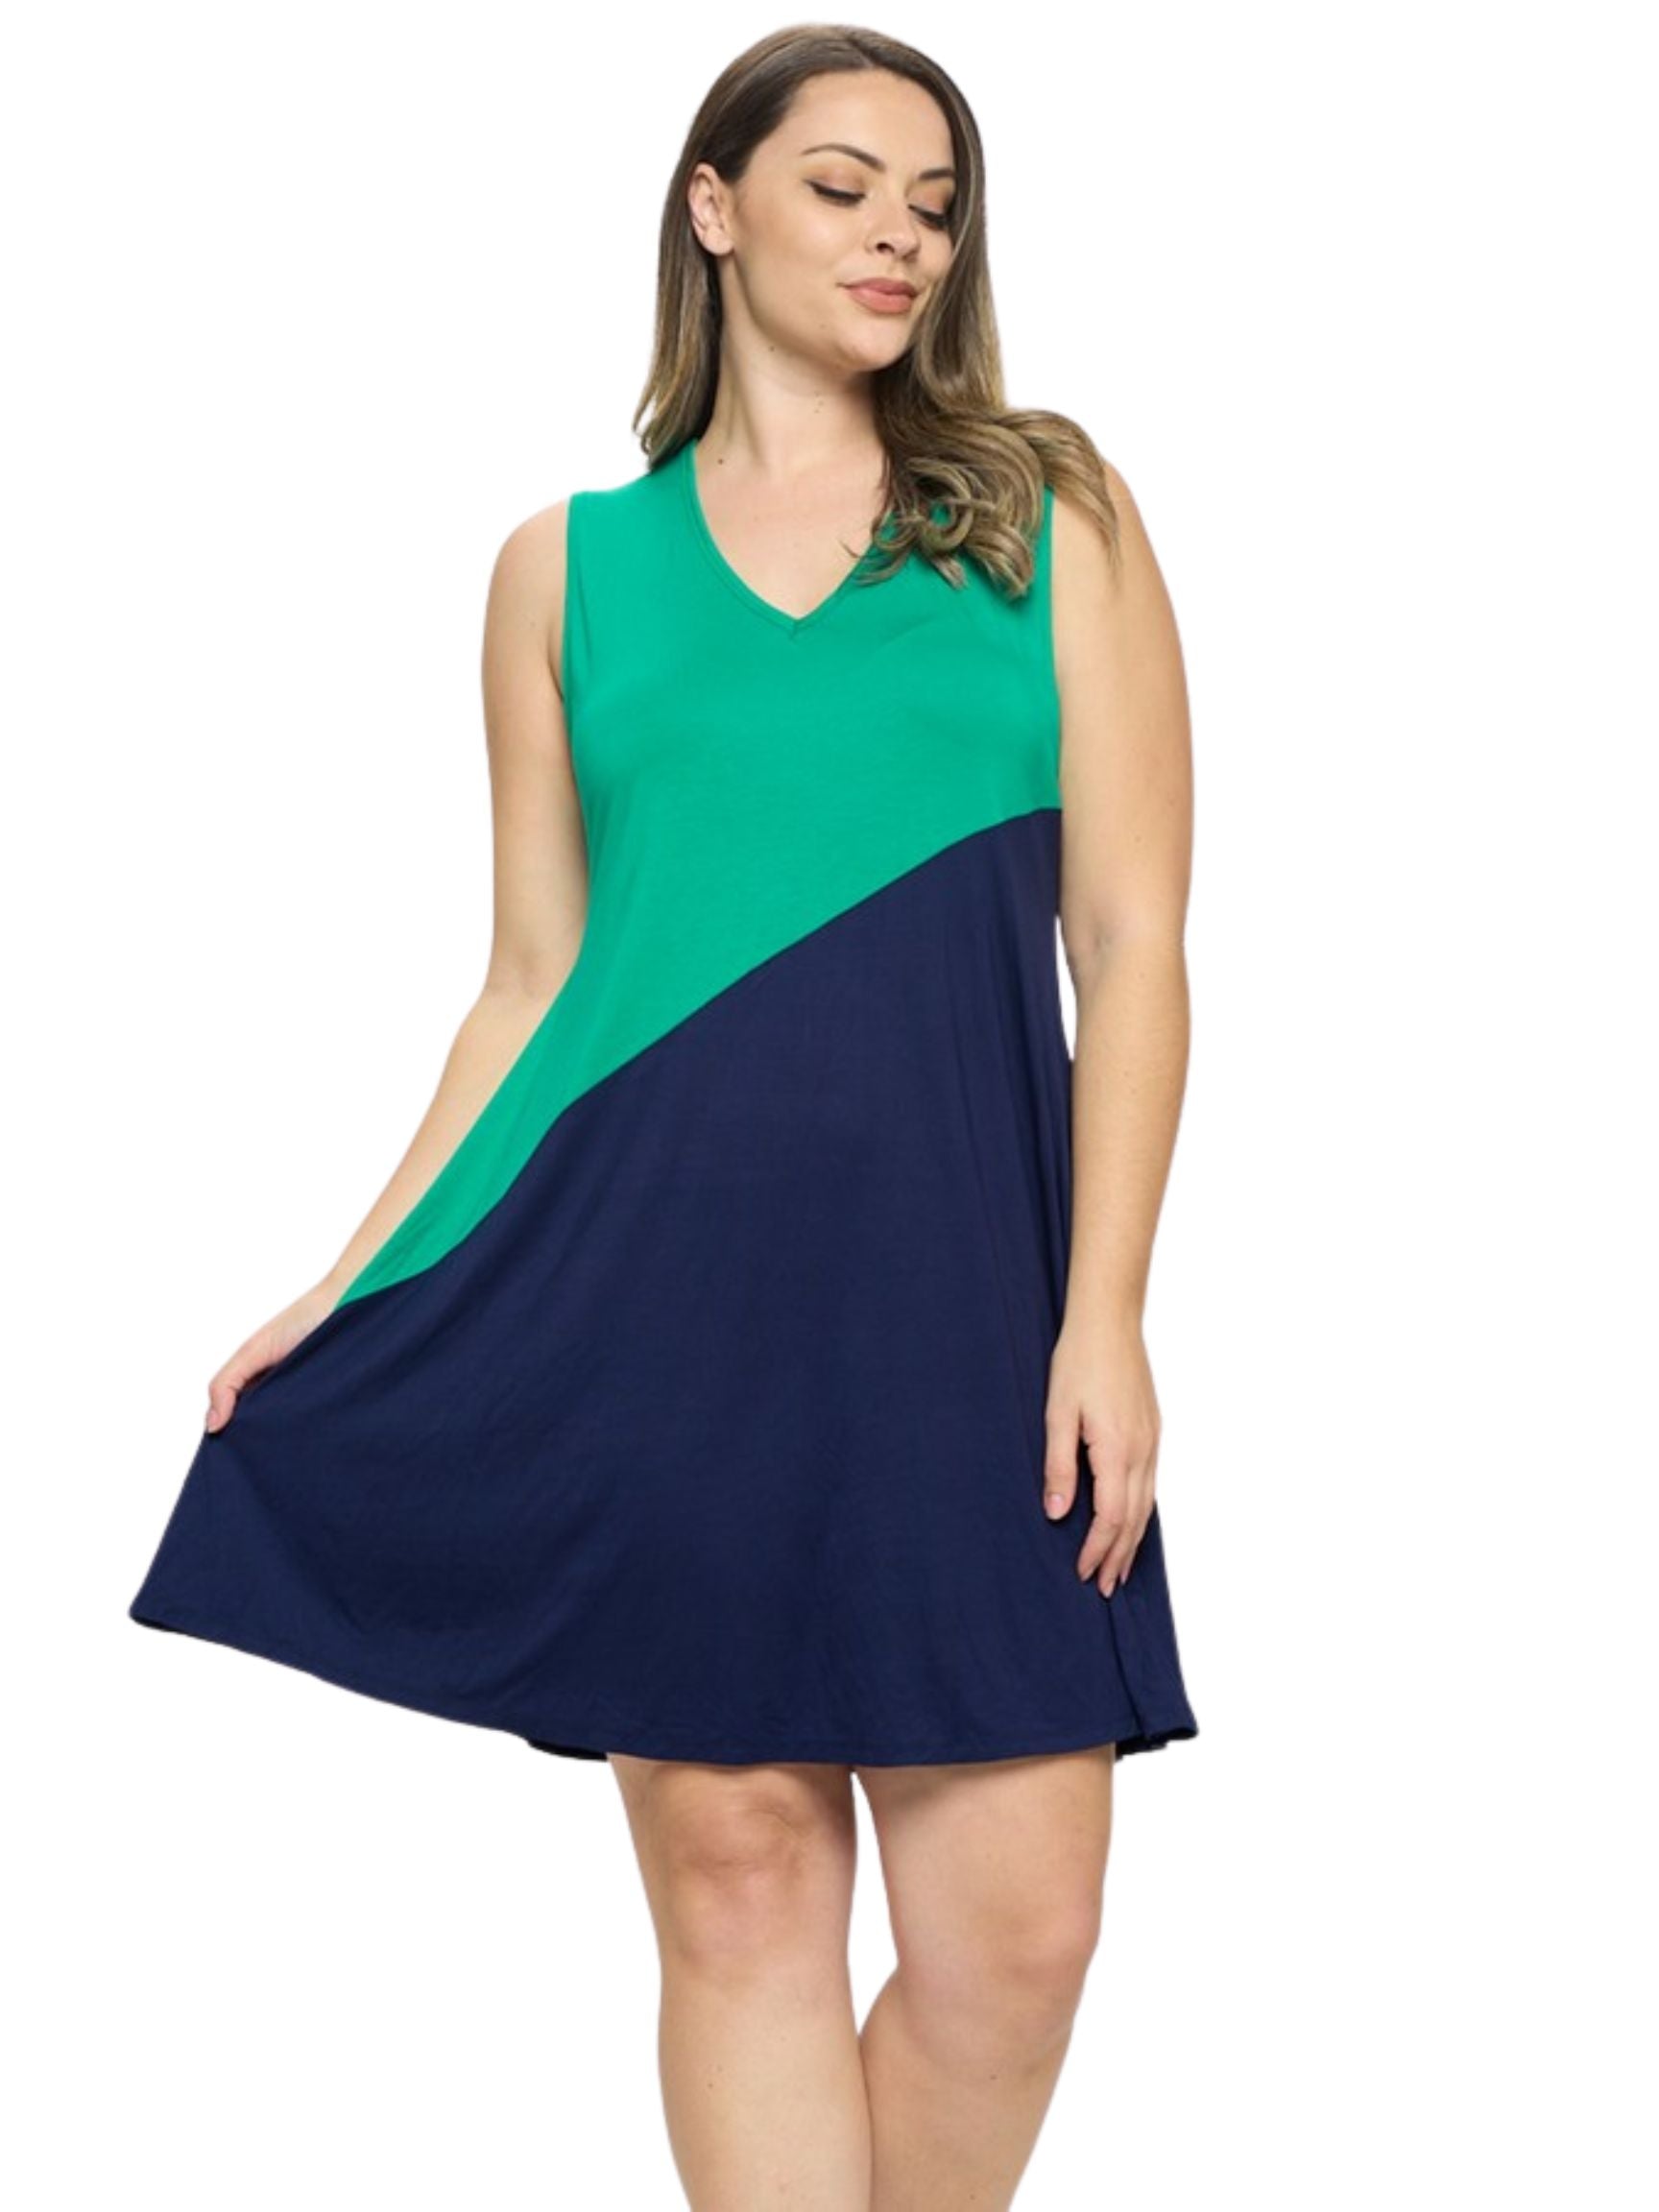 Diagonal Colorblocked Dress - Green/Navy